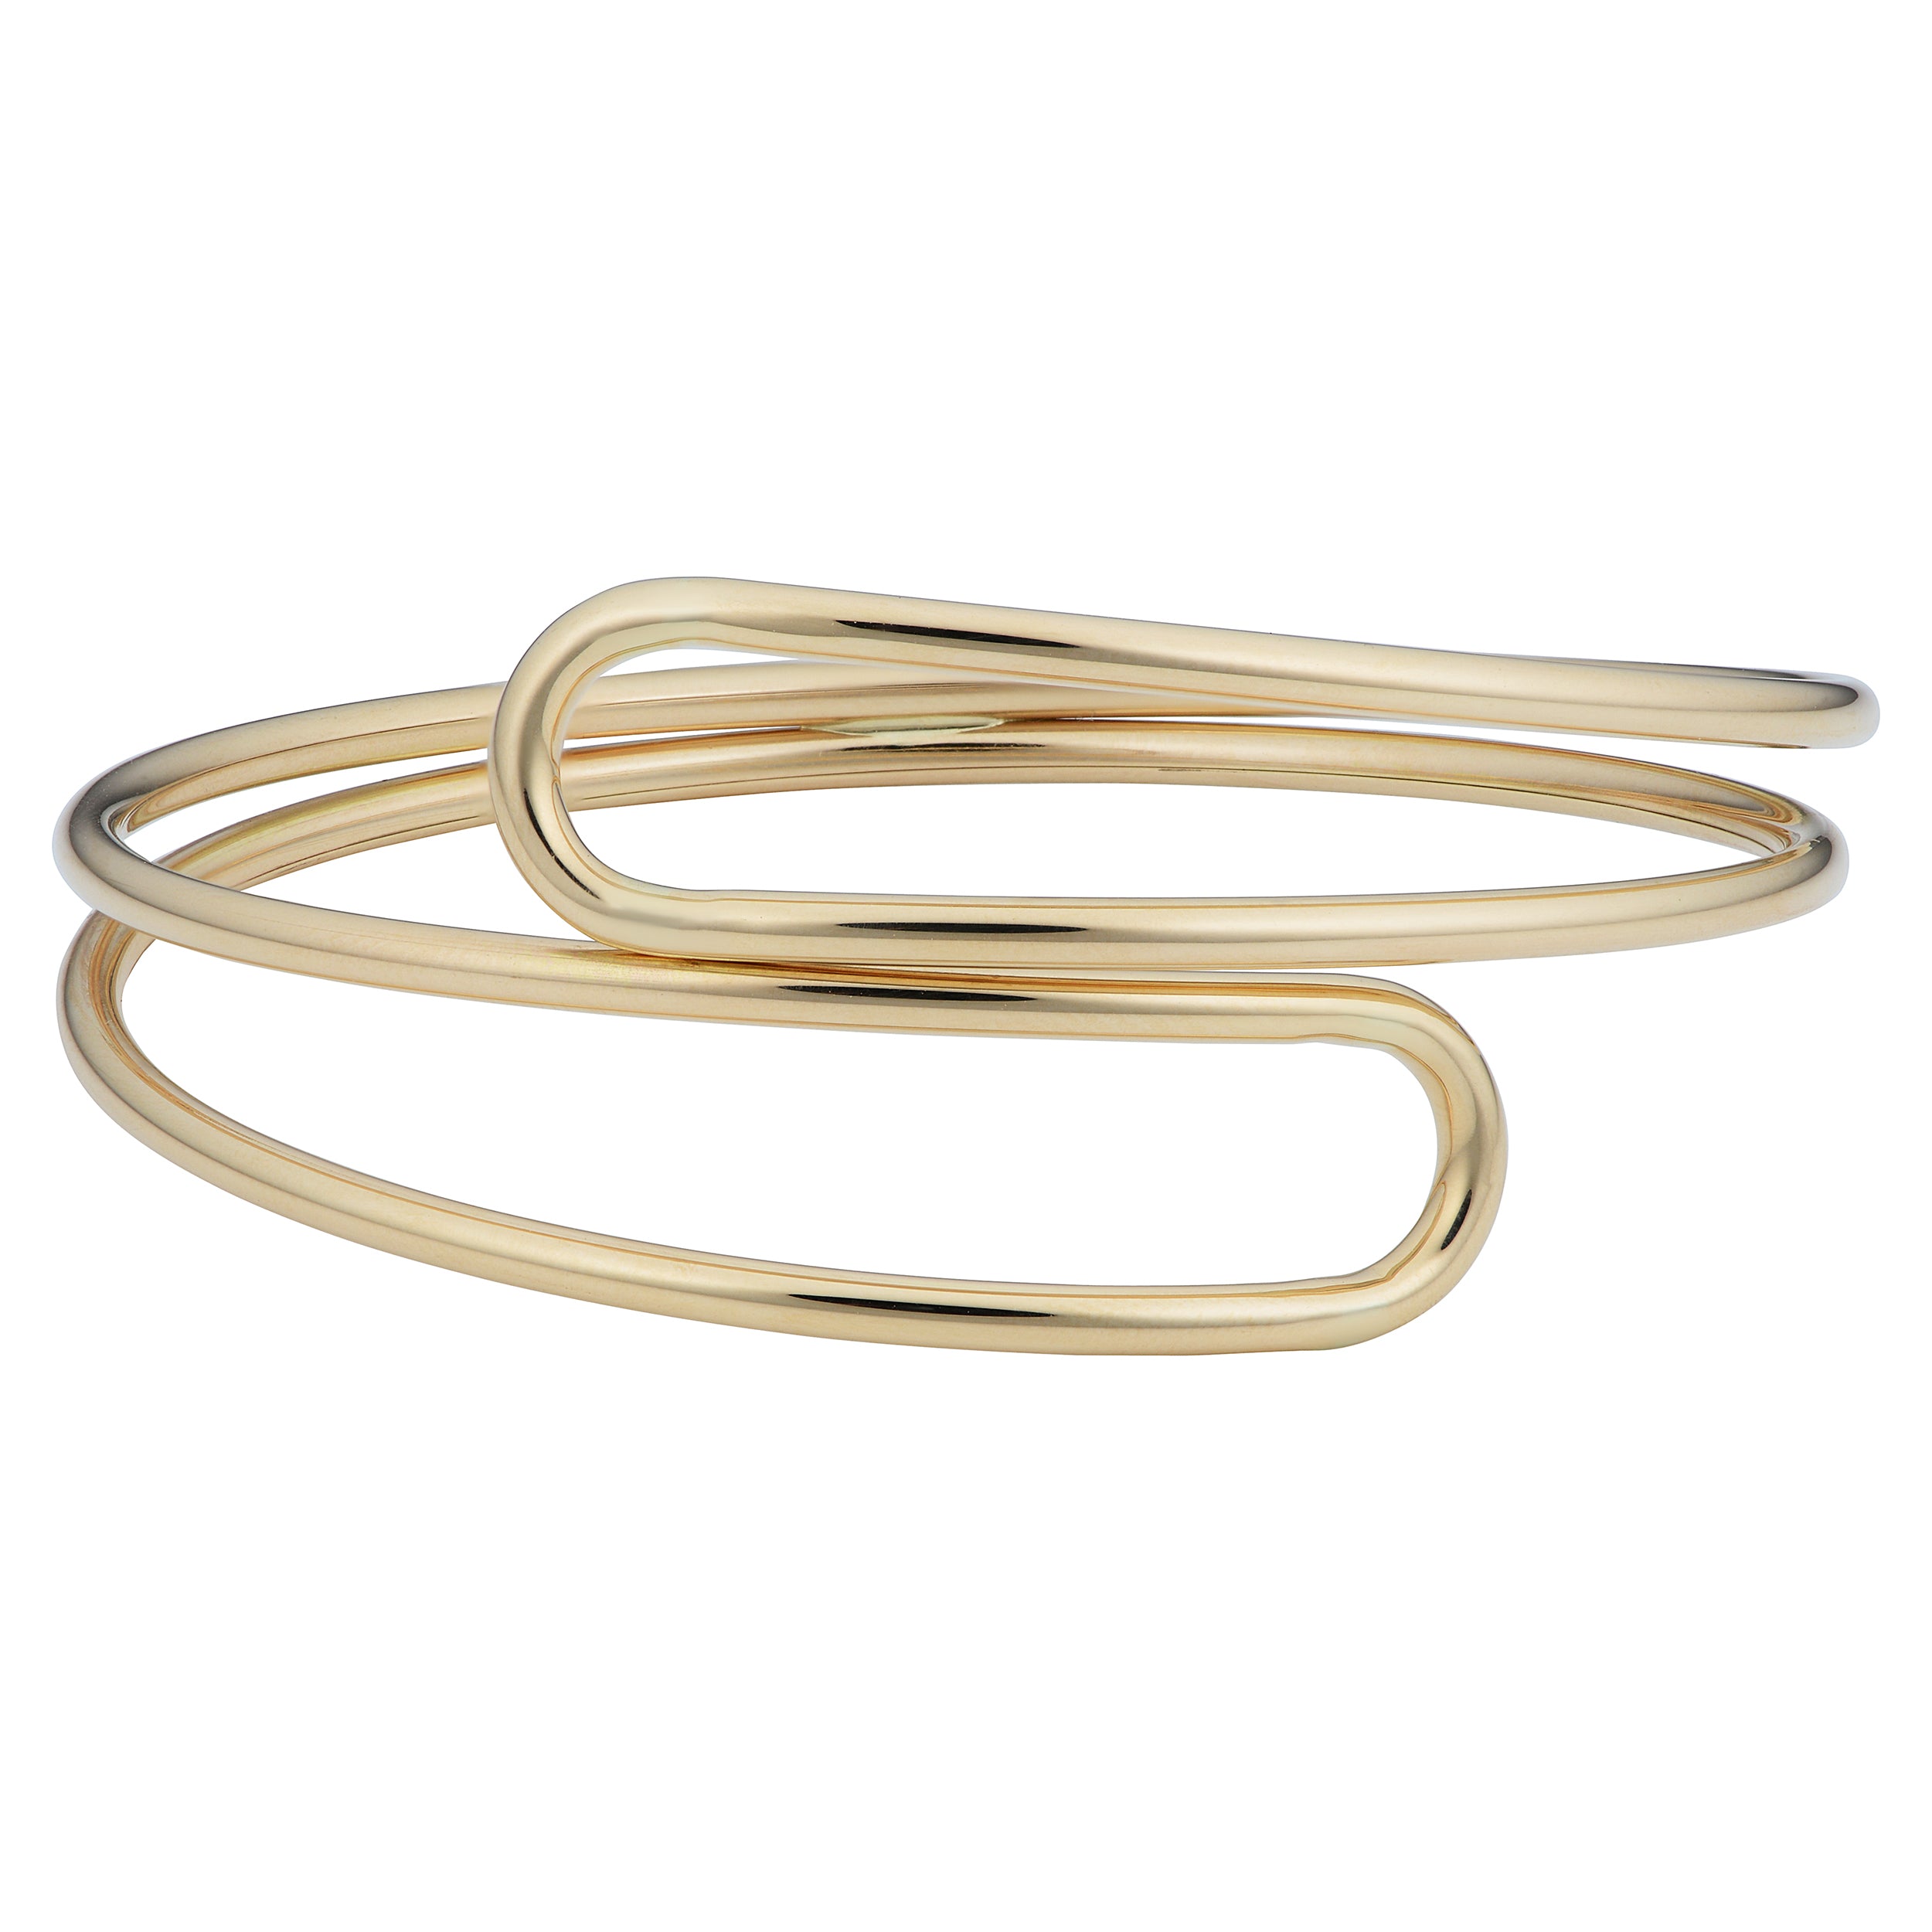 10k Yellow Gold Bypass Women's Bangle Bracelet, 7.5" fine designer jewelry for men and women